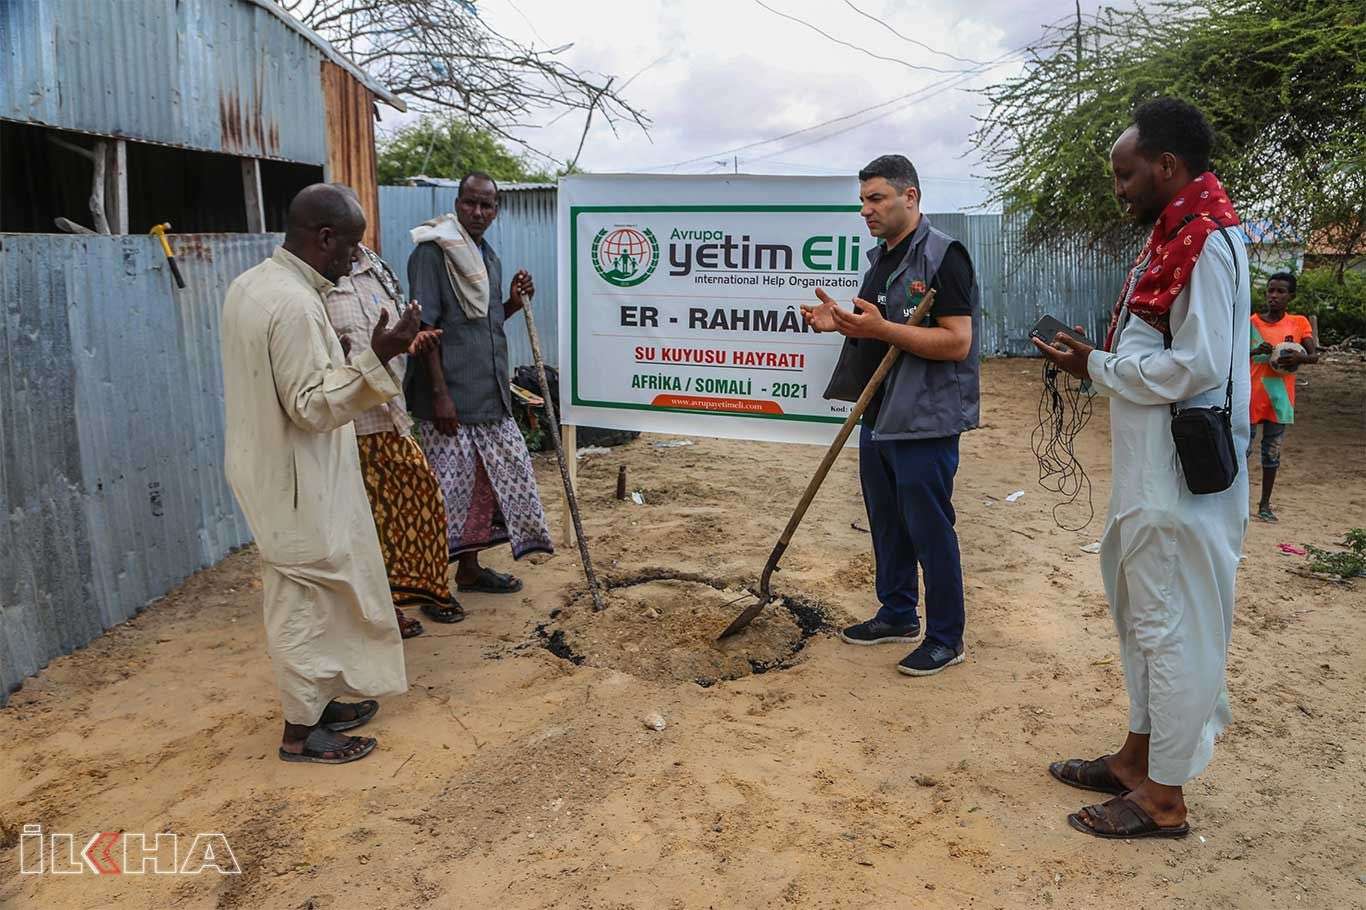 Somalia: European Yetim Eli continues its charity works in Mogadishu